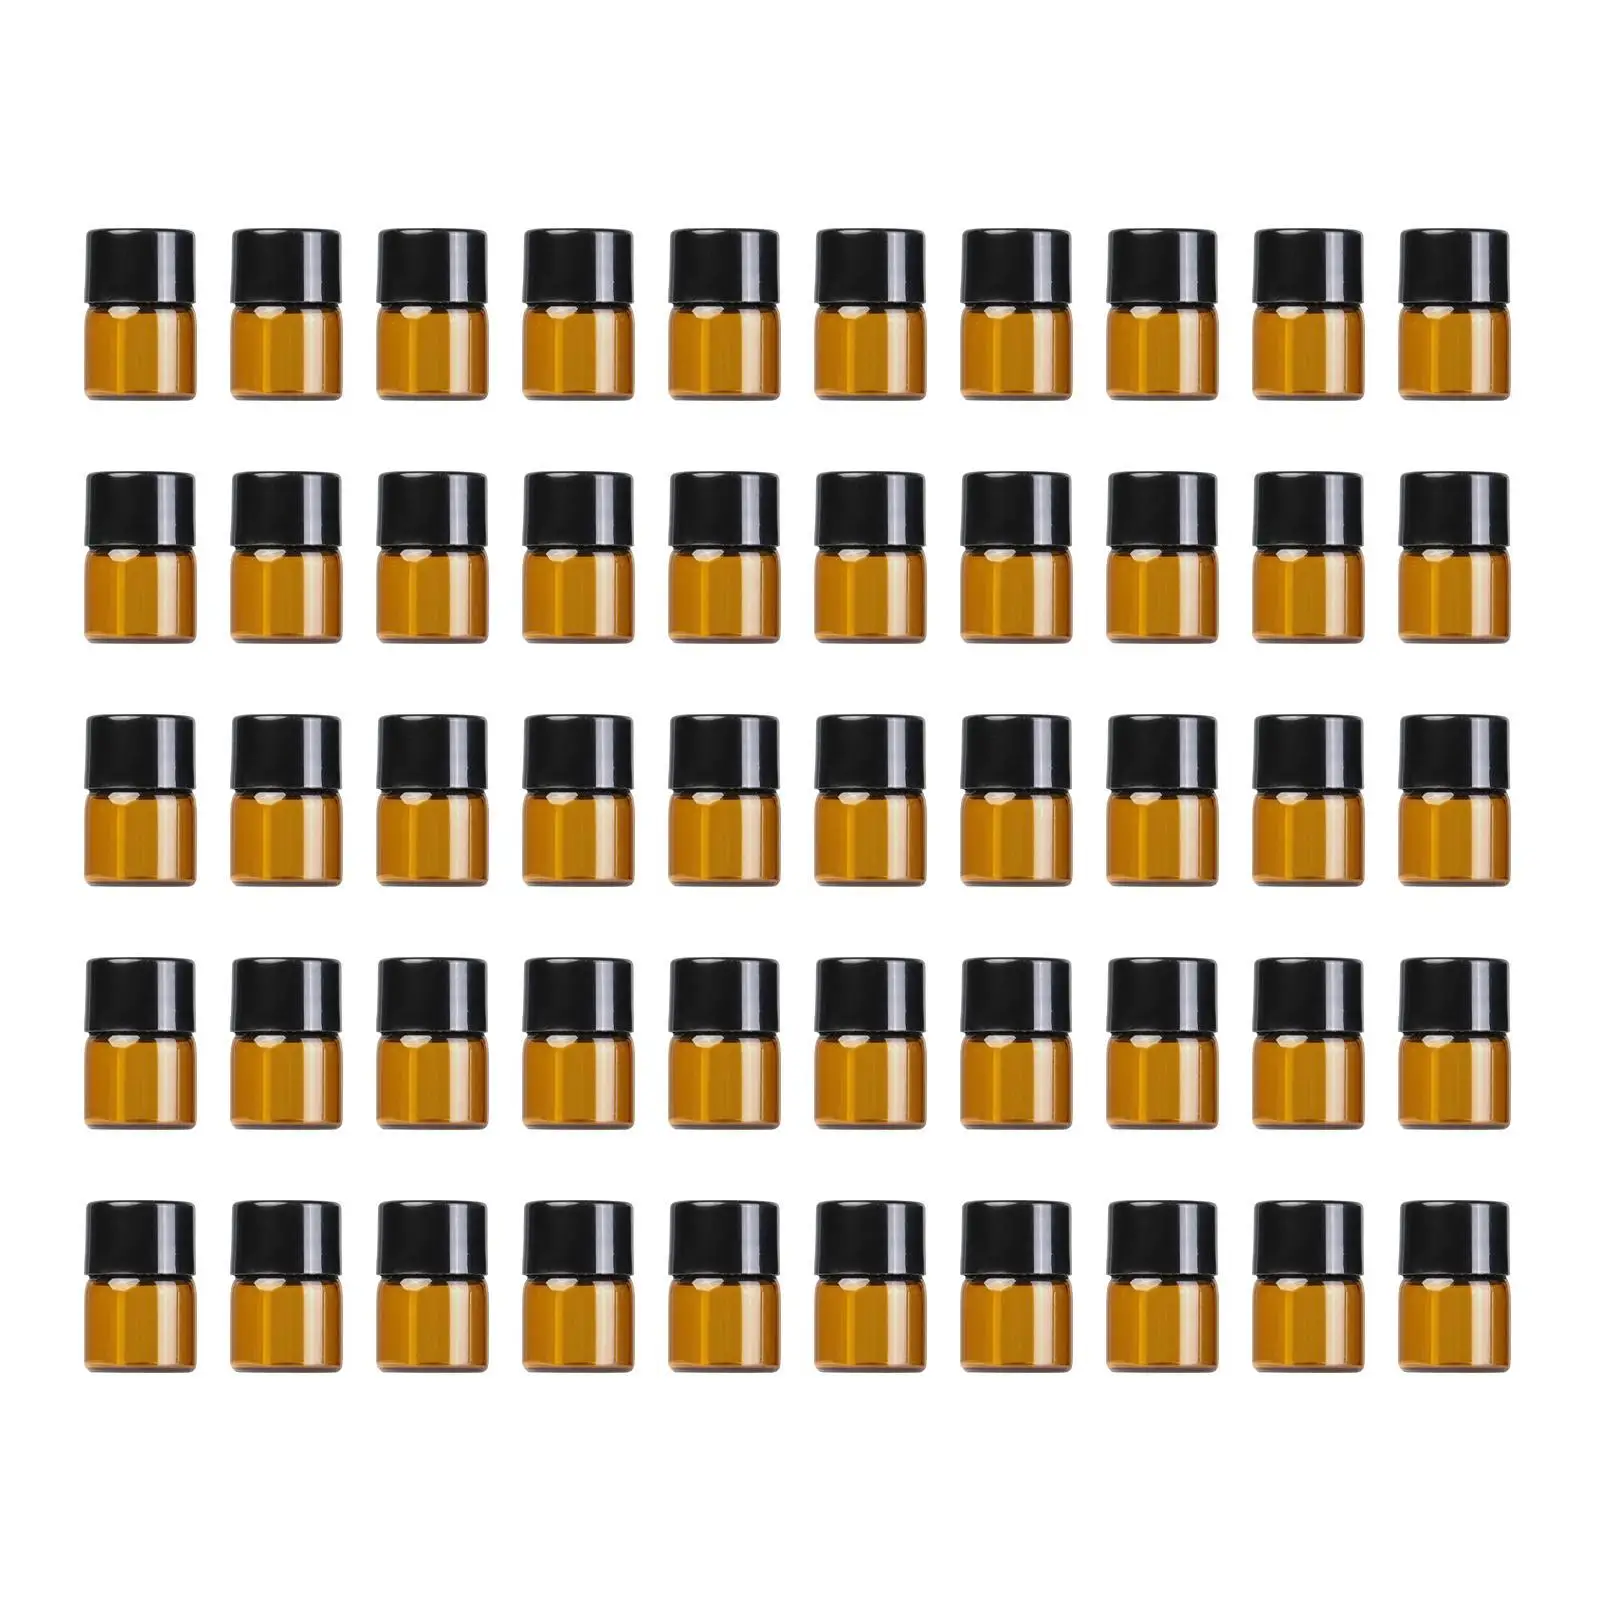 

50x Refillable Glass Bottles Durable Mini for Fragrance Samples 1ml Hole Plug